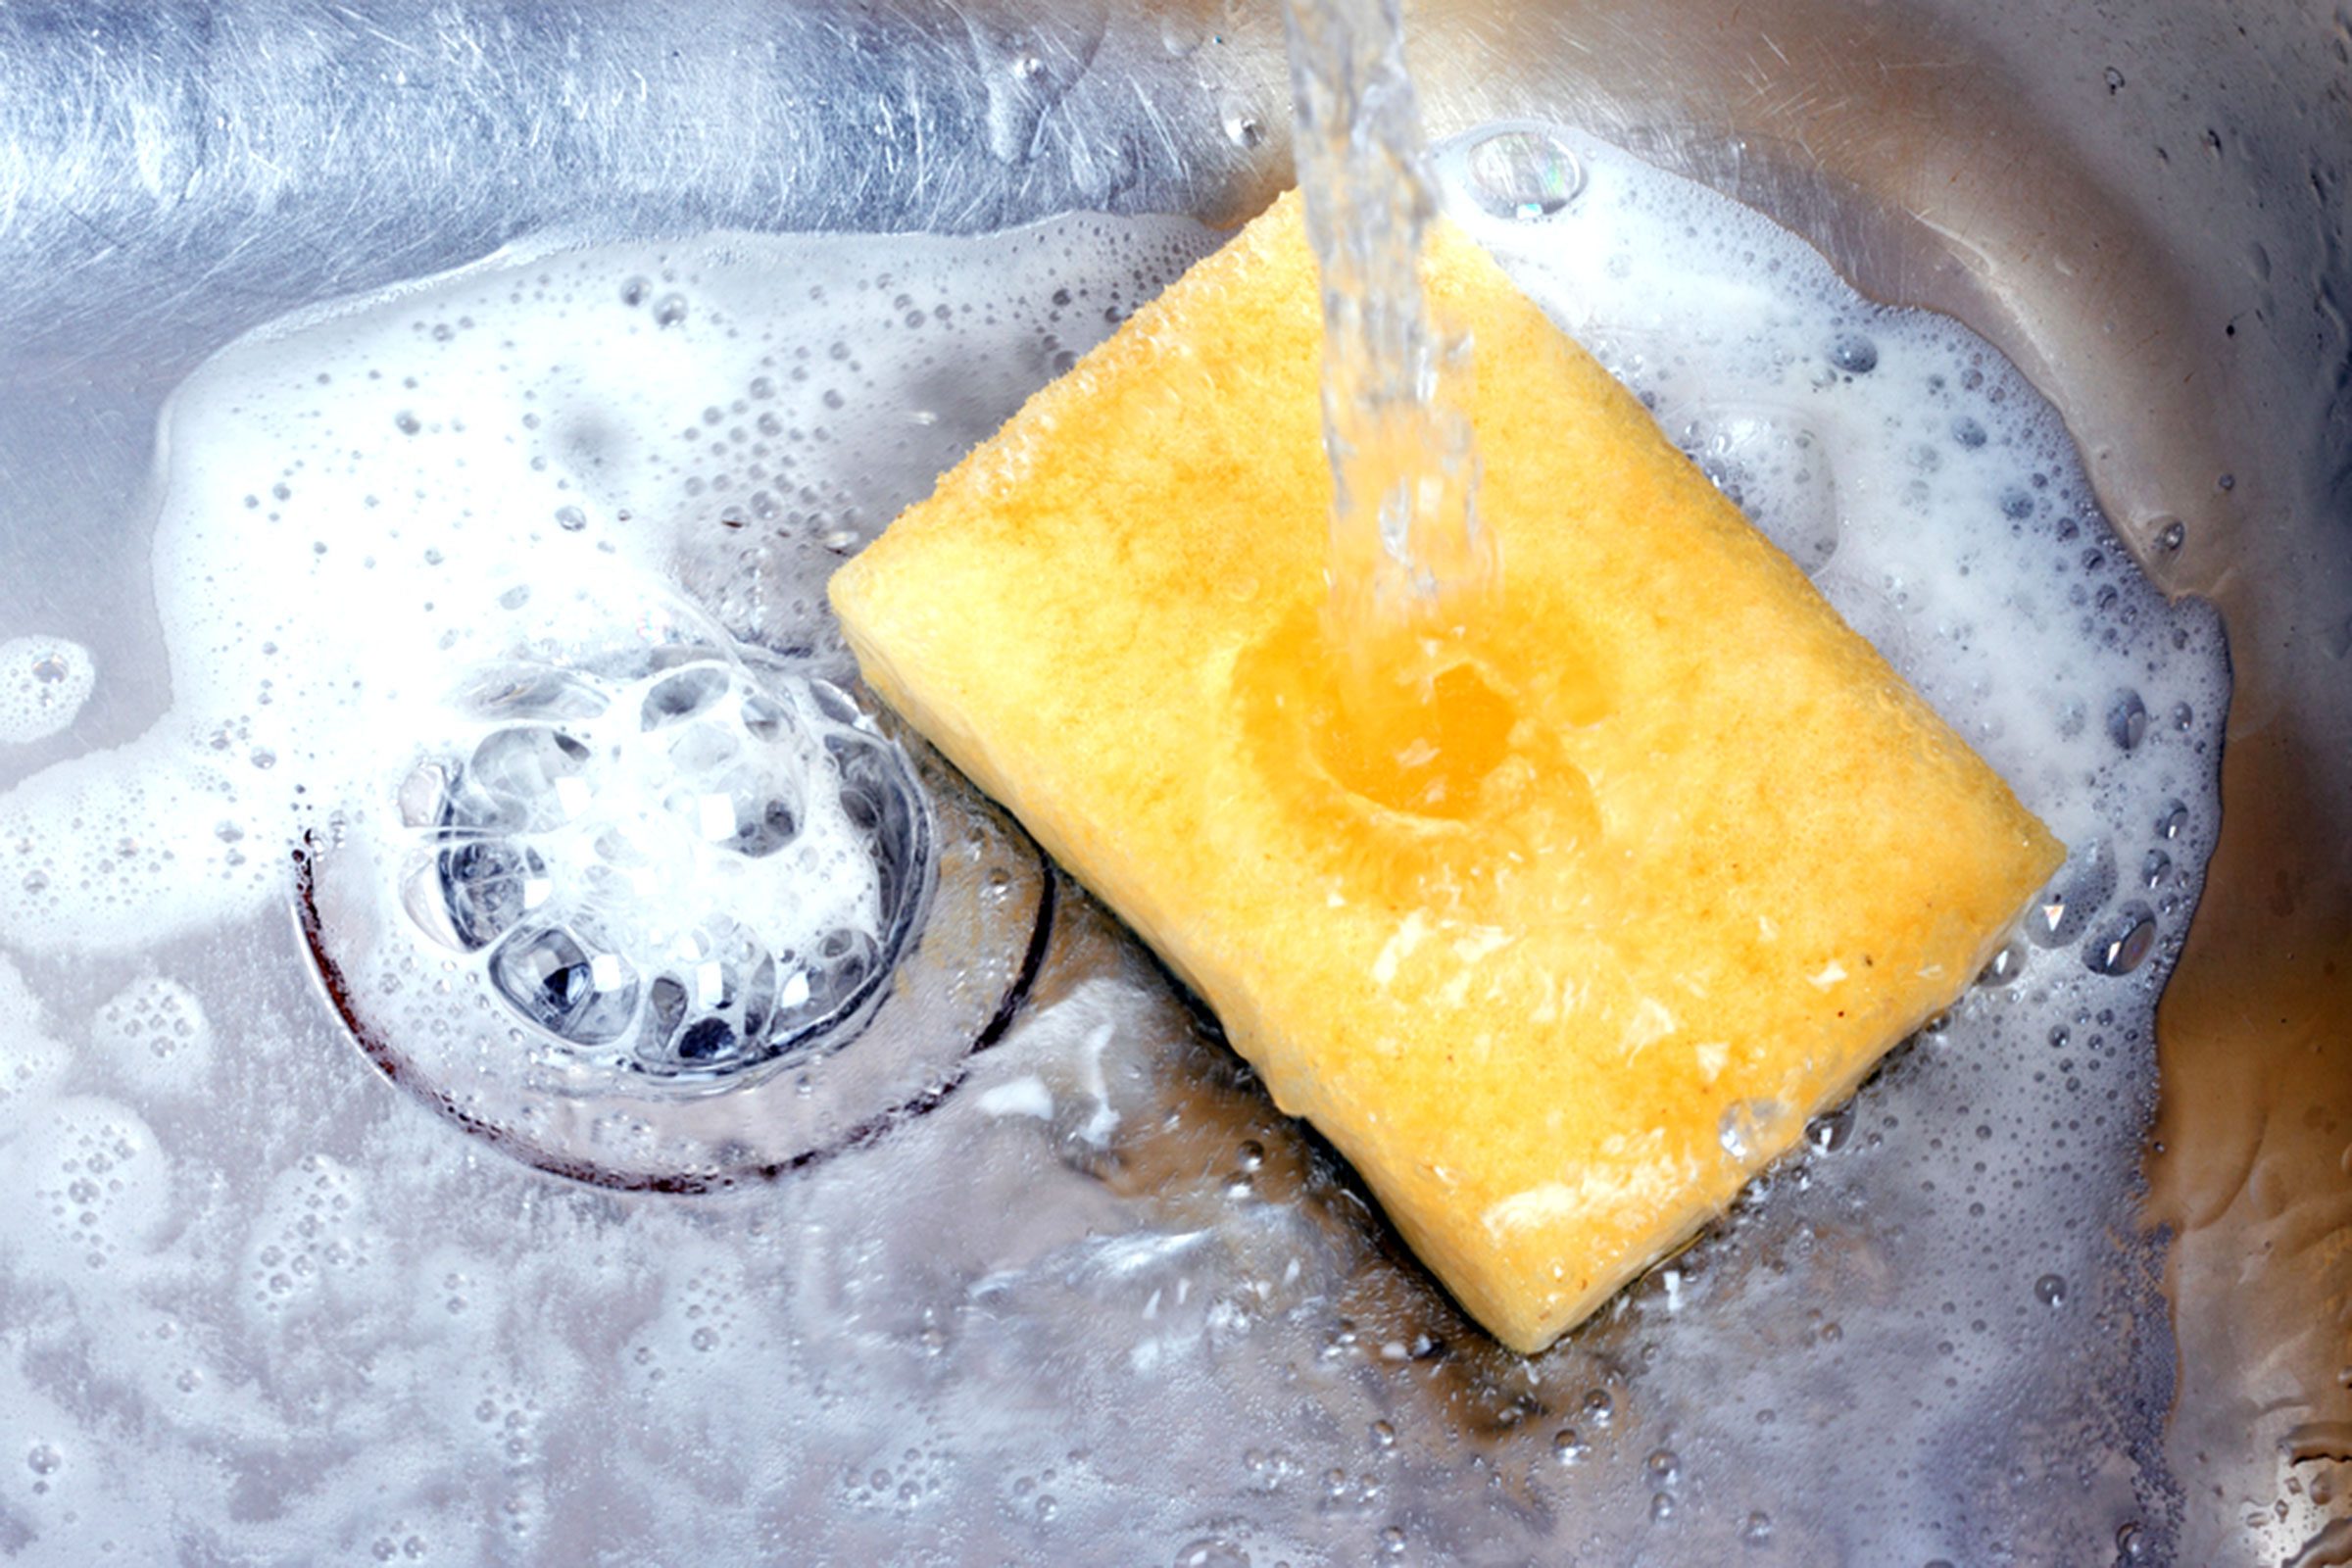 The Dirty Little Secret Inside Your Kitchen Sponge - Health News Hub